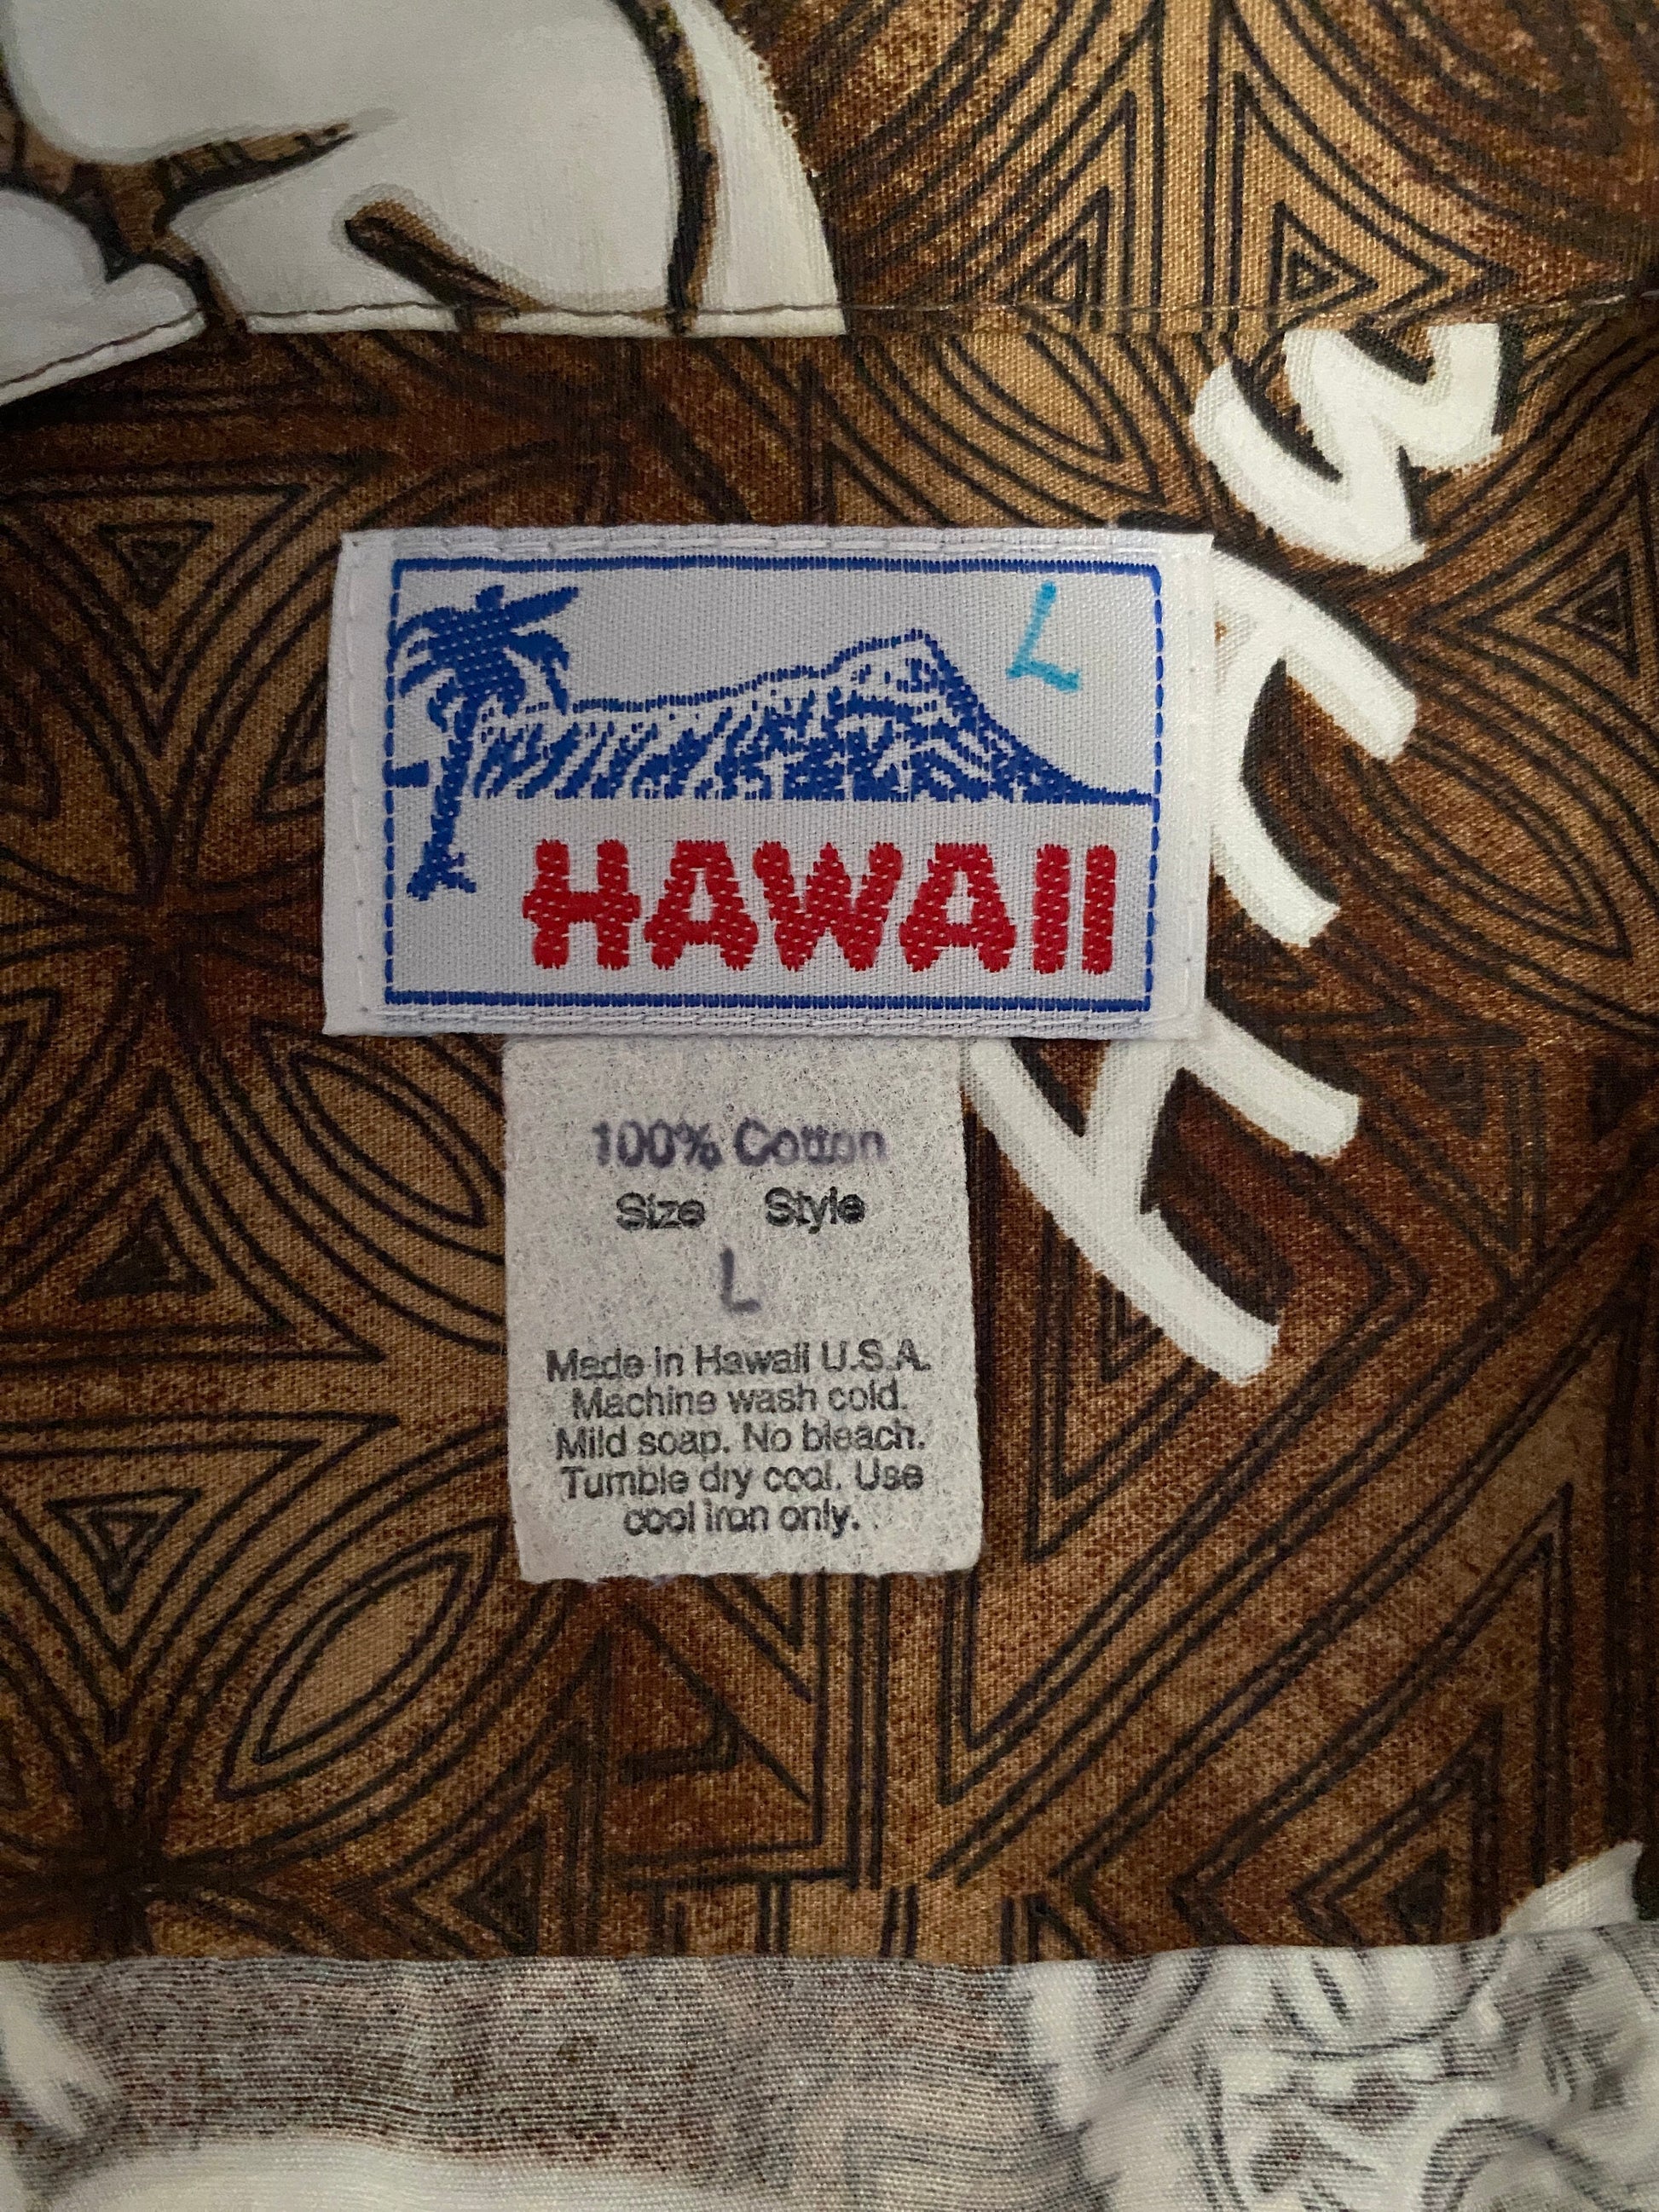 Large vintage 80s Hawaiian cotton shirt made in Hawaii - retro island fashion.